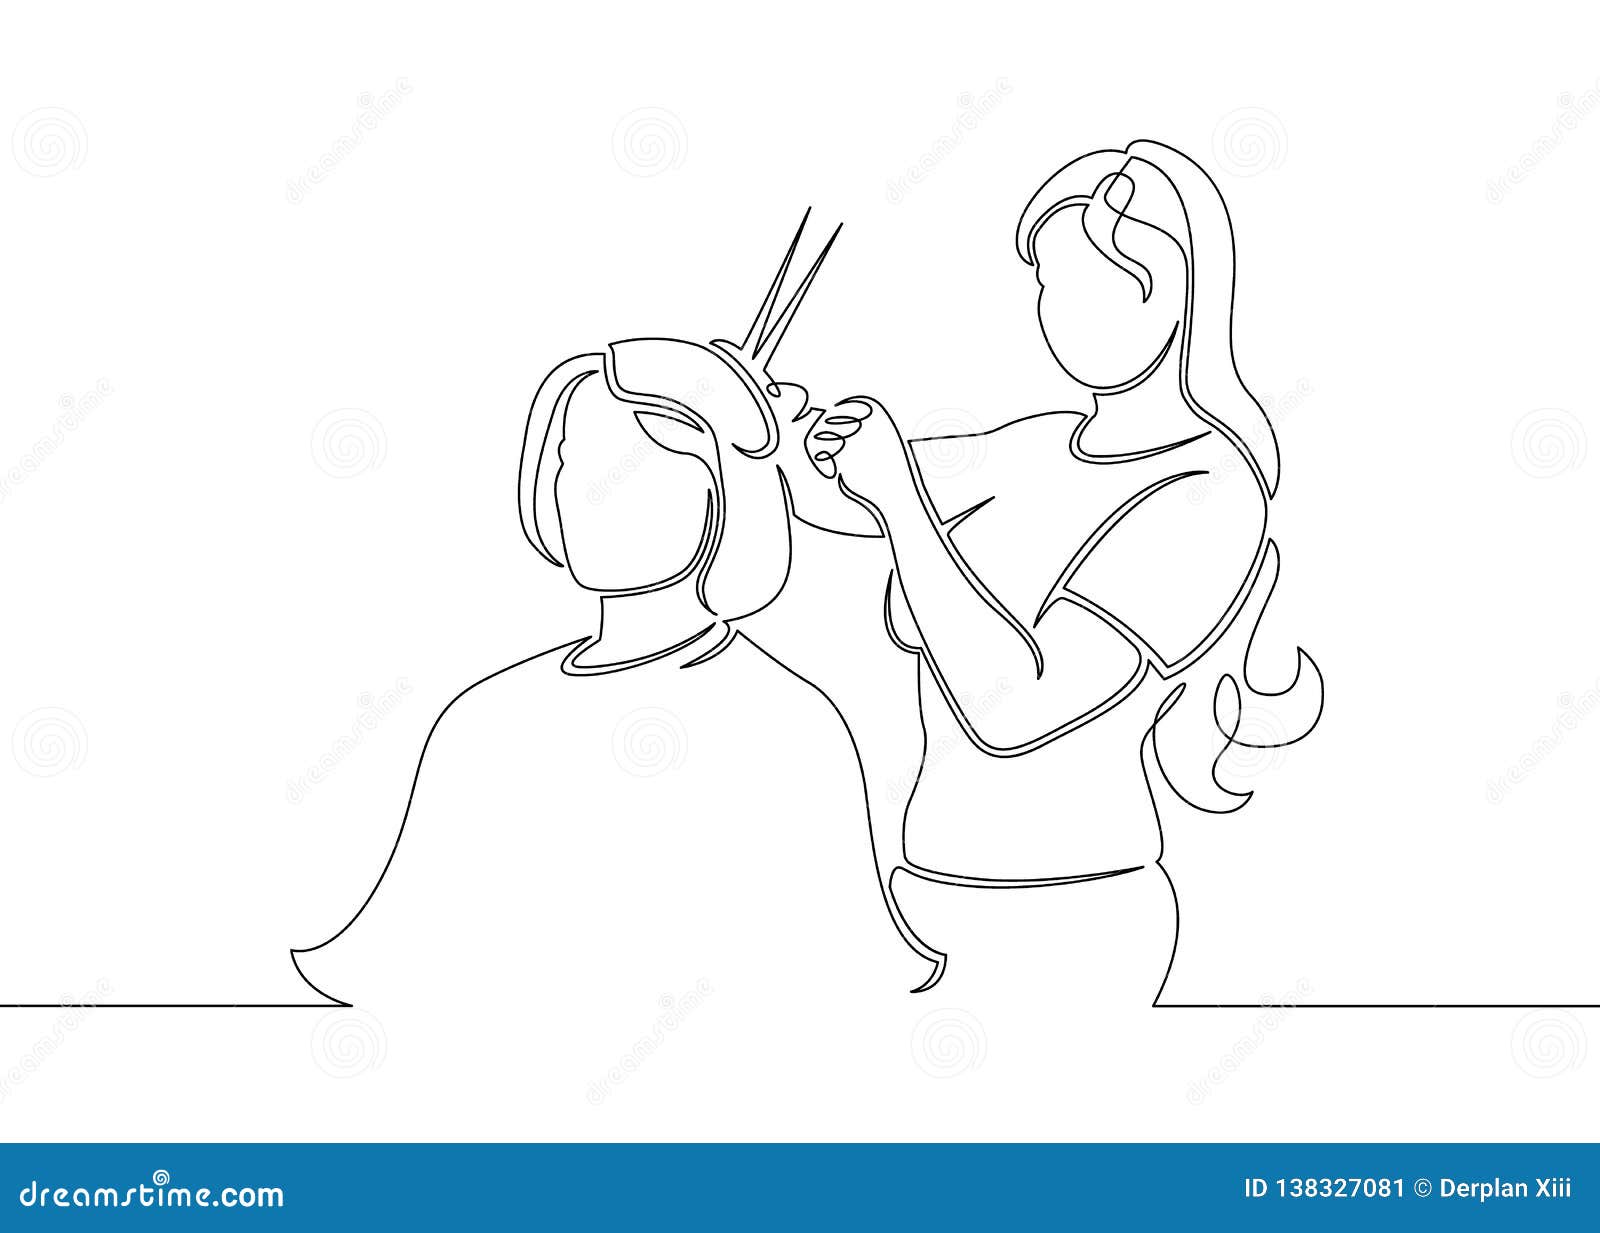 Drawn Line Art Doodle Hairdresser Stock Vector - Illustration of business,  client: 138327081